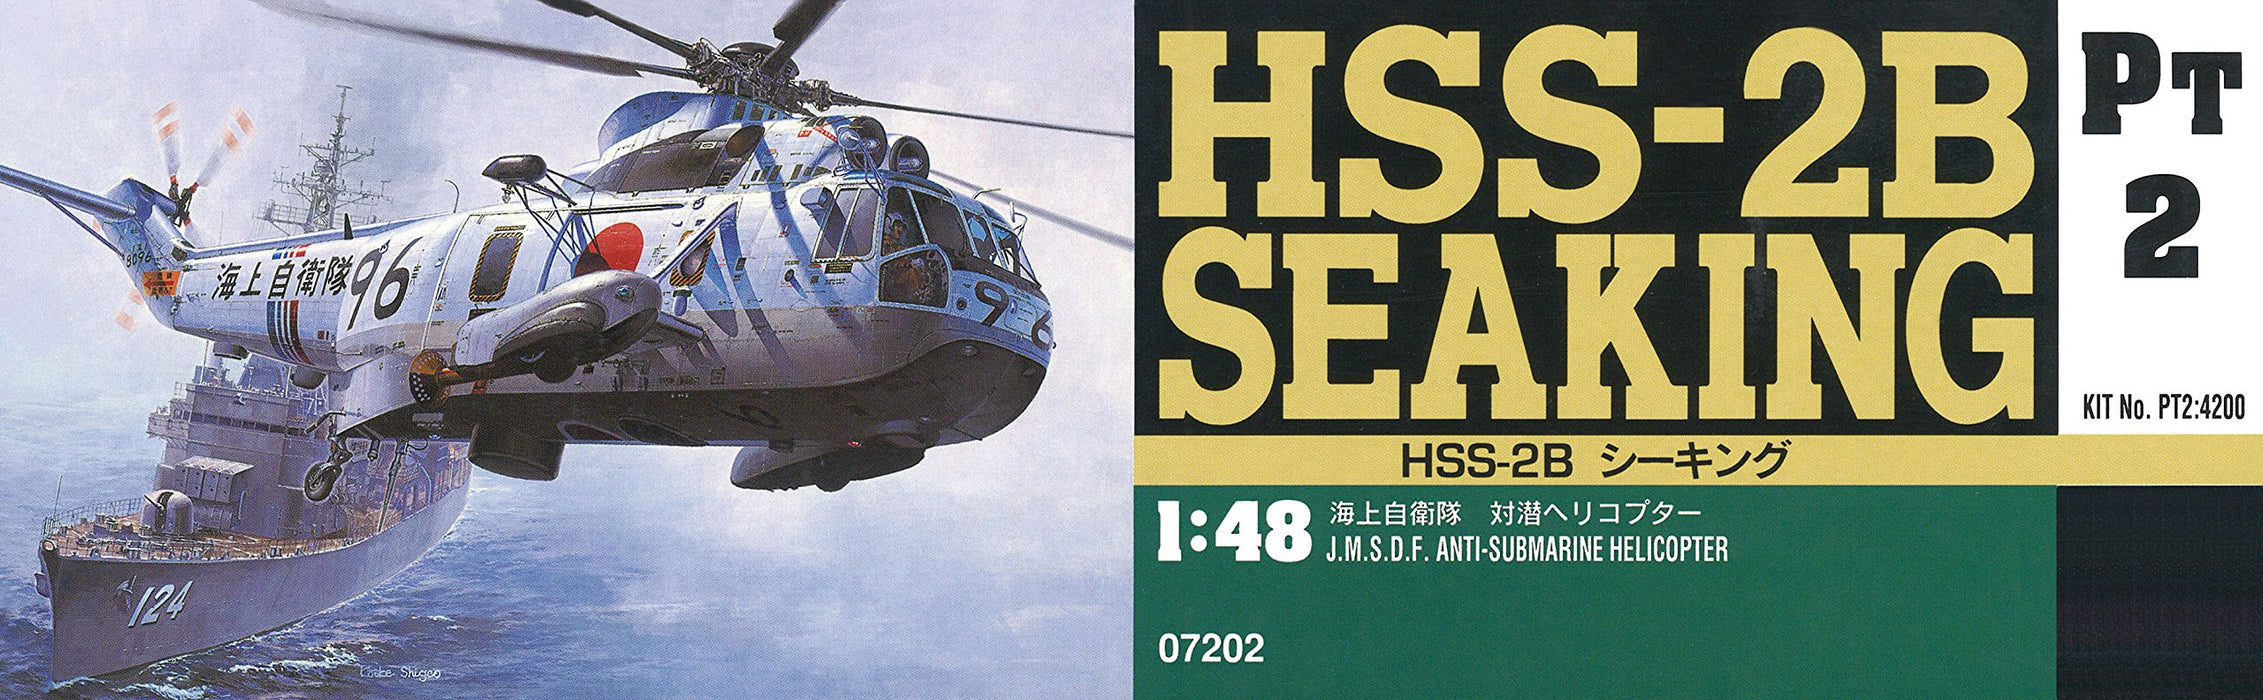 Hasegawa 1/48 JMSDF Sikorsky HSS-2B Plastic Model Kit HAPT02 Made in Japan NEW_3